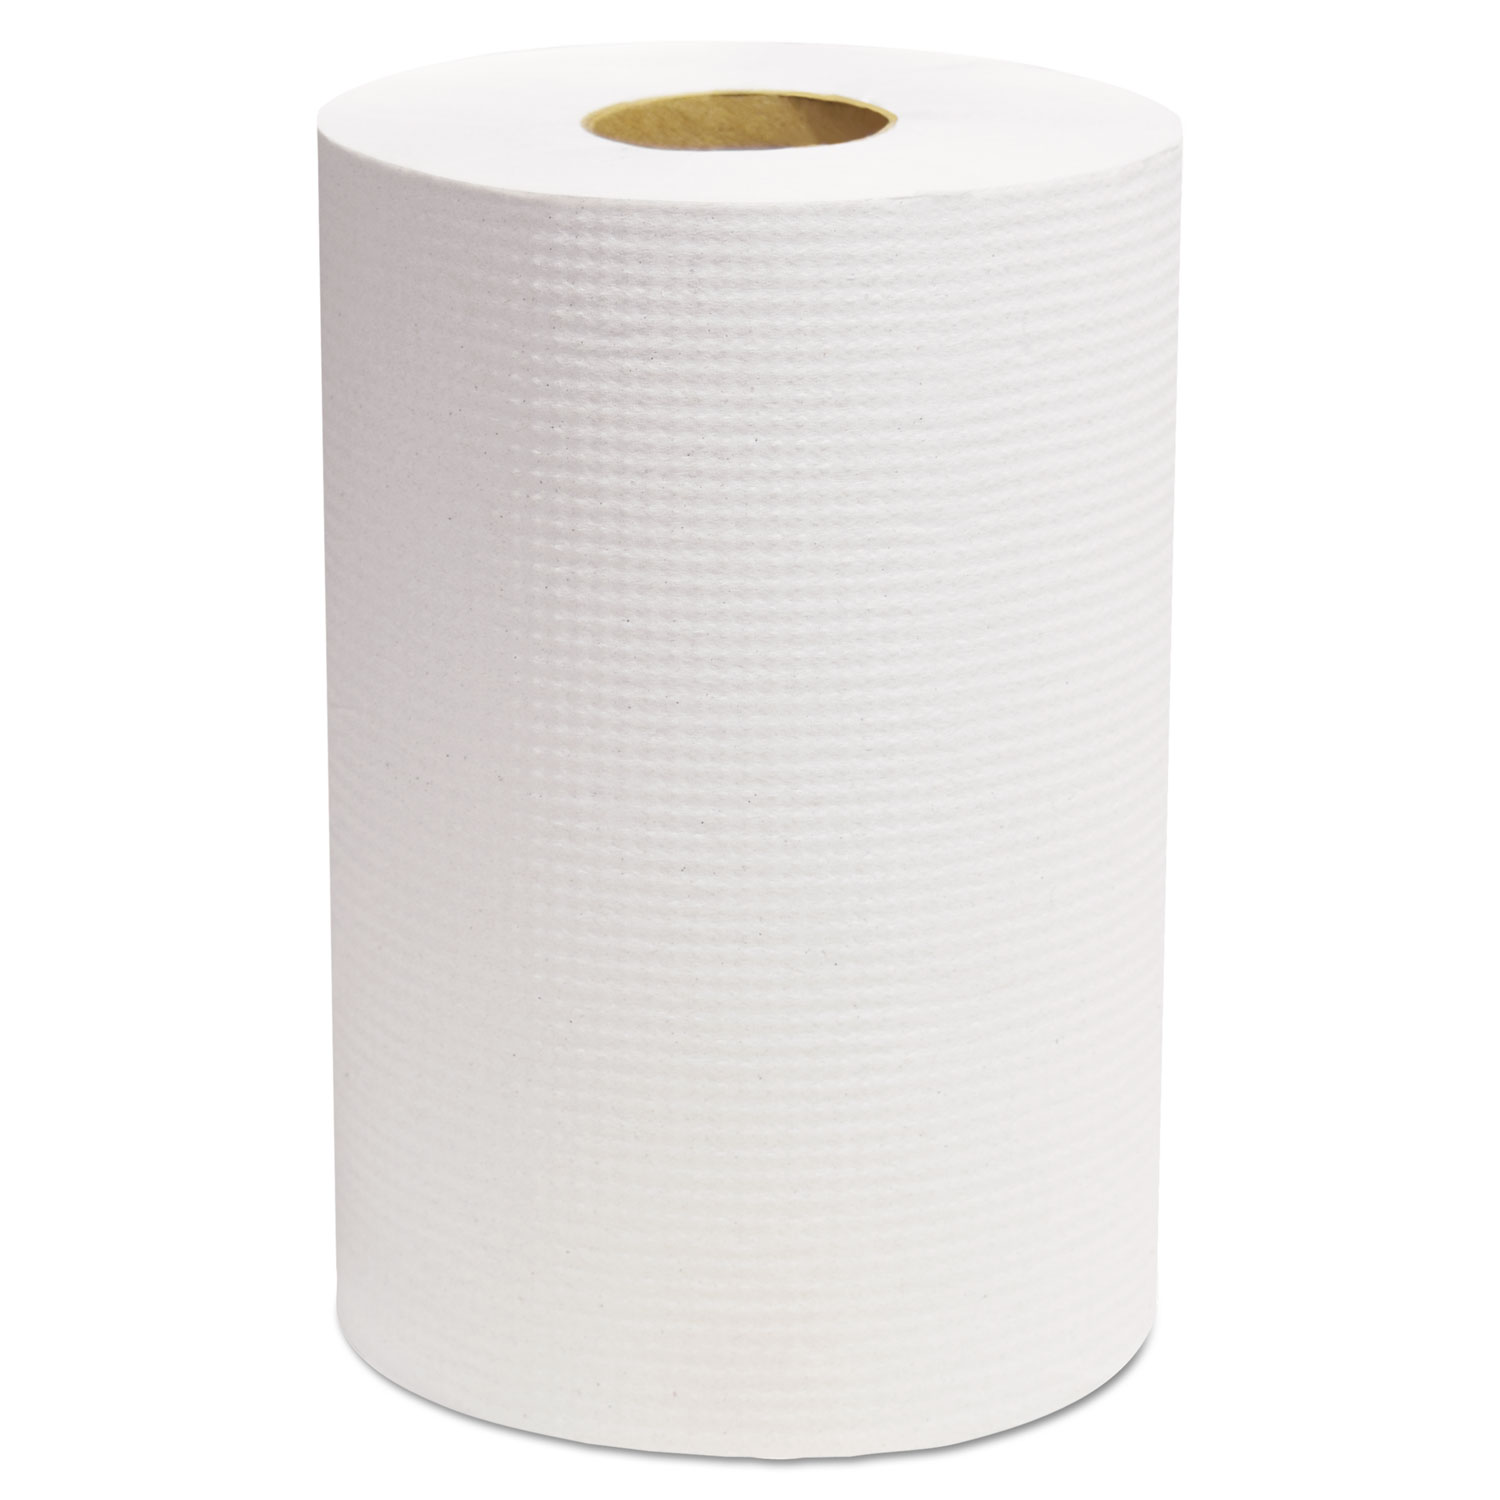  Cascades PRO H230 Select Roll Paper Towels, White, 7 7/8 x 350 ft, 12/Carton (CSDH230) 